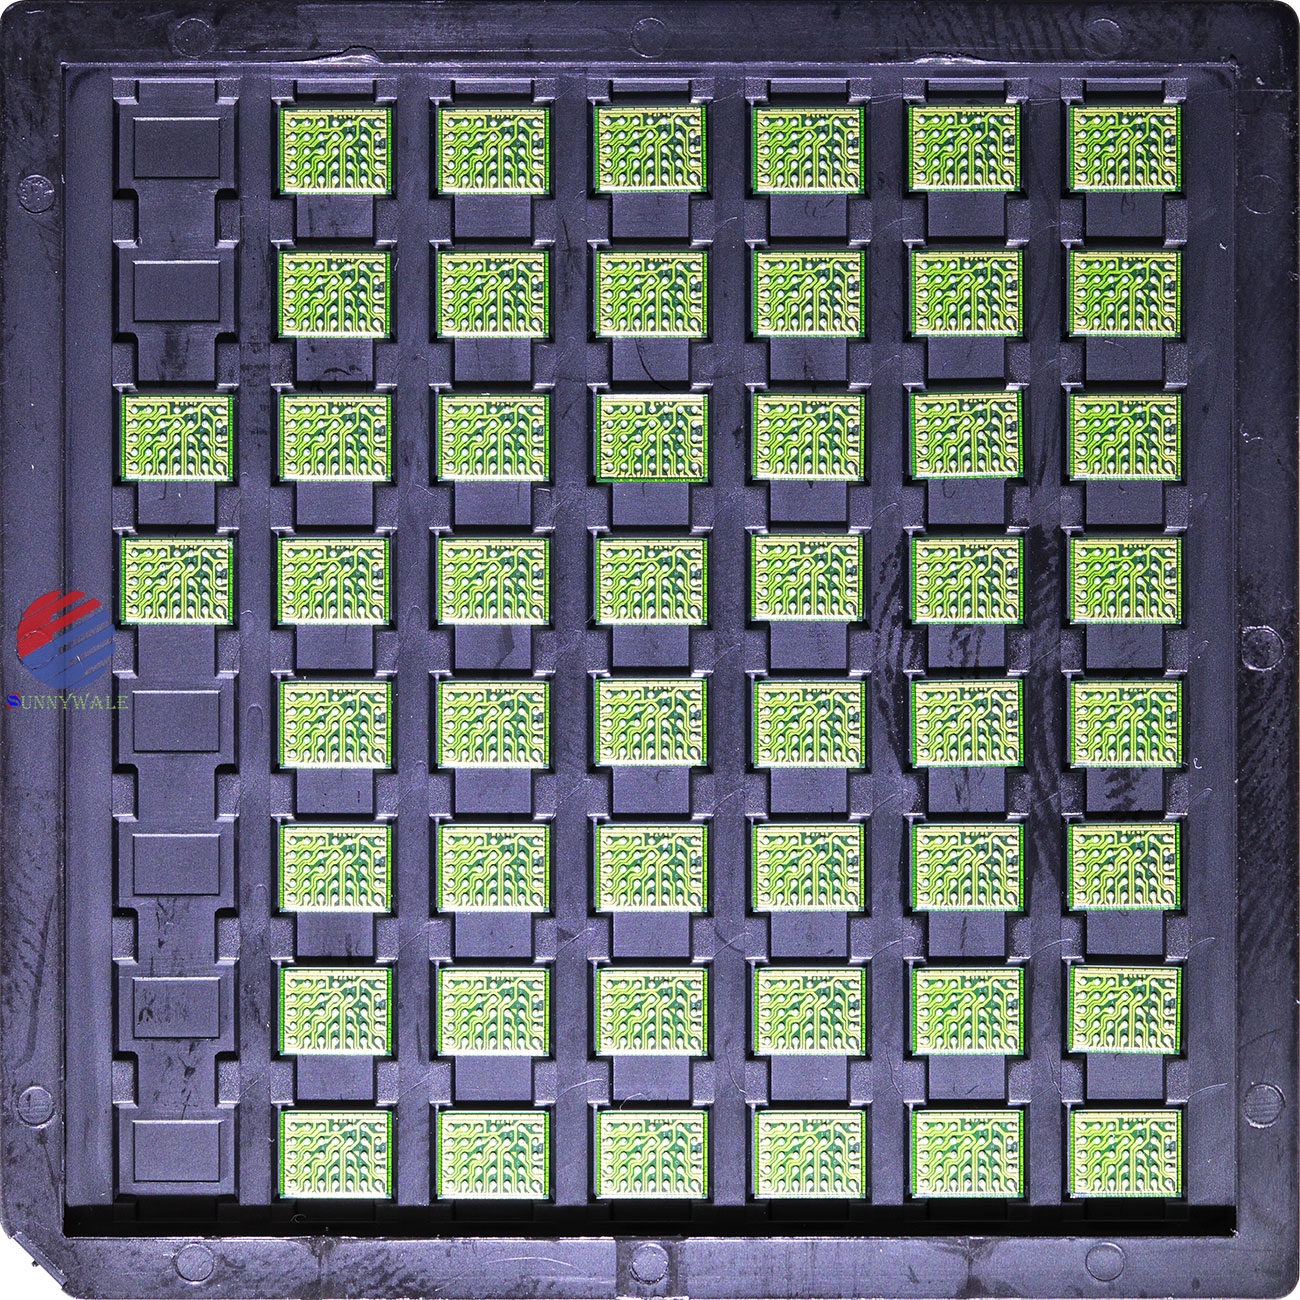 PV4109K, PIXELPLUS CMOS, CSP 1/4-inch Ssensor, HD Single Chip CMOS Image Sensor, with HD-Analog Transmitter cmos sensor,  1024X768@30fps analog sensor, DVP(Digital Video parallel) and HD-Analog interface output image sensor